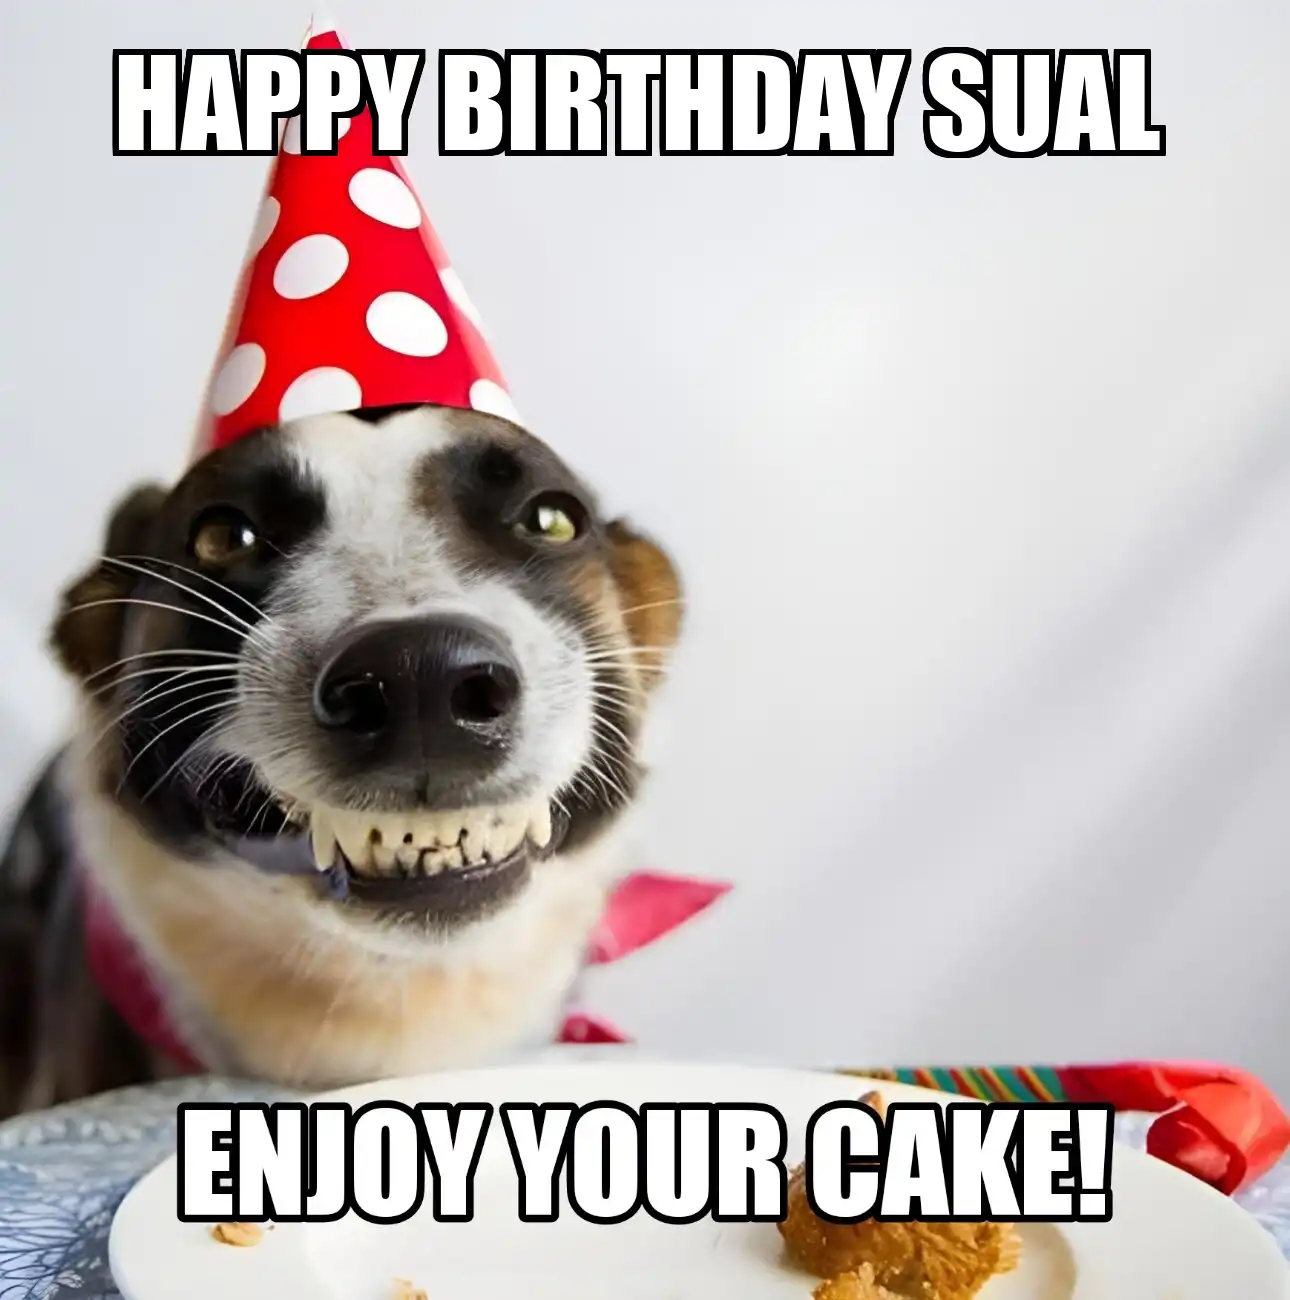 Happy Birthday Sual Enjoy Your Cake Dog Meme